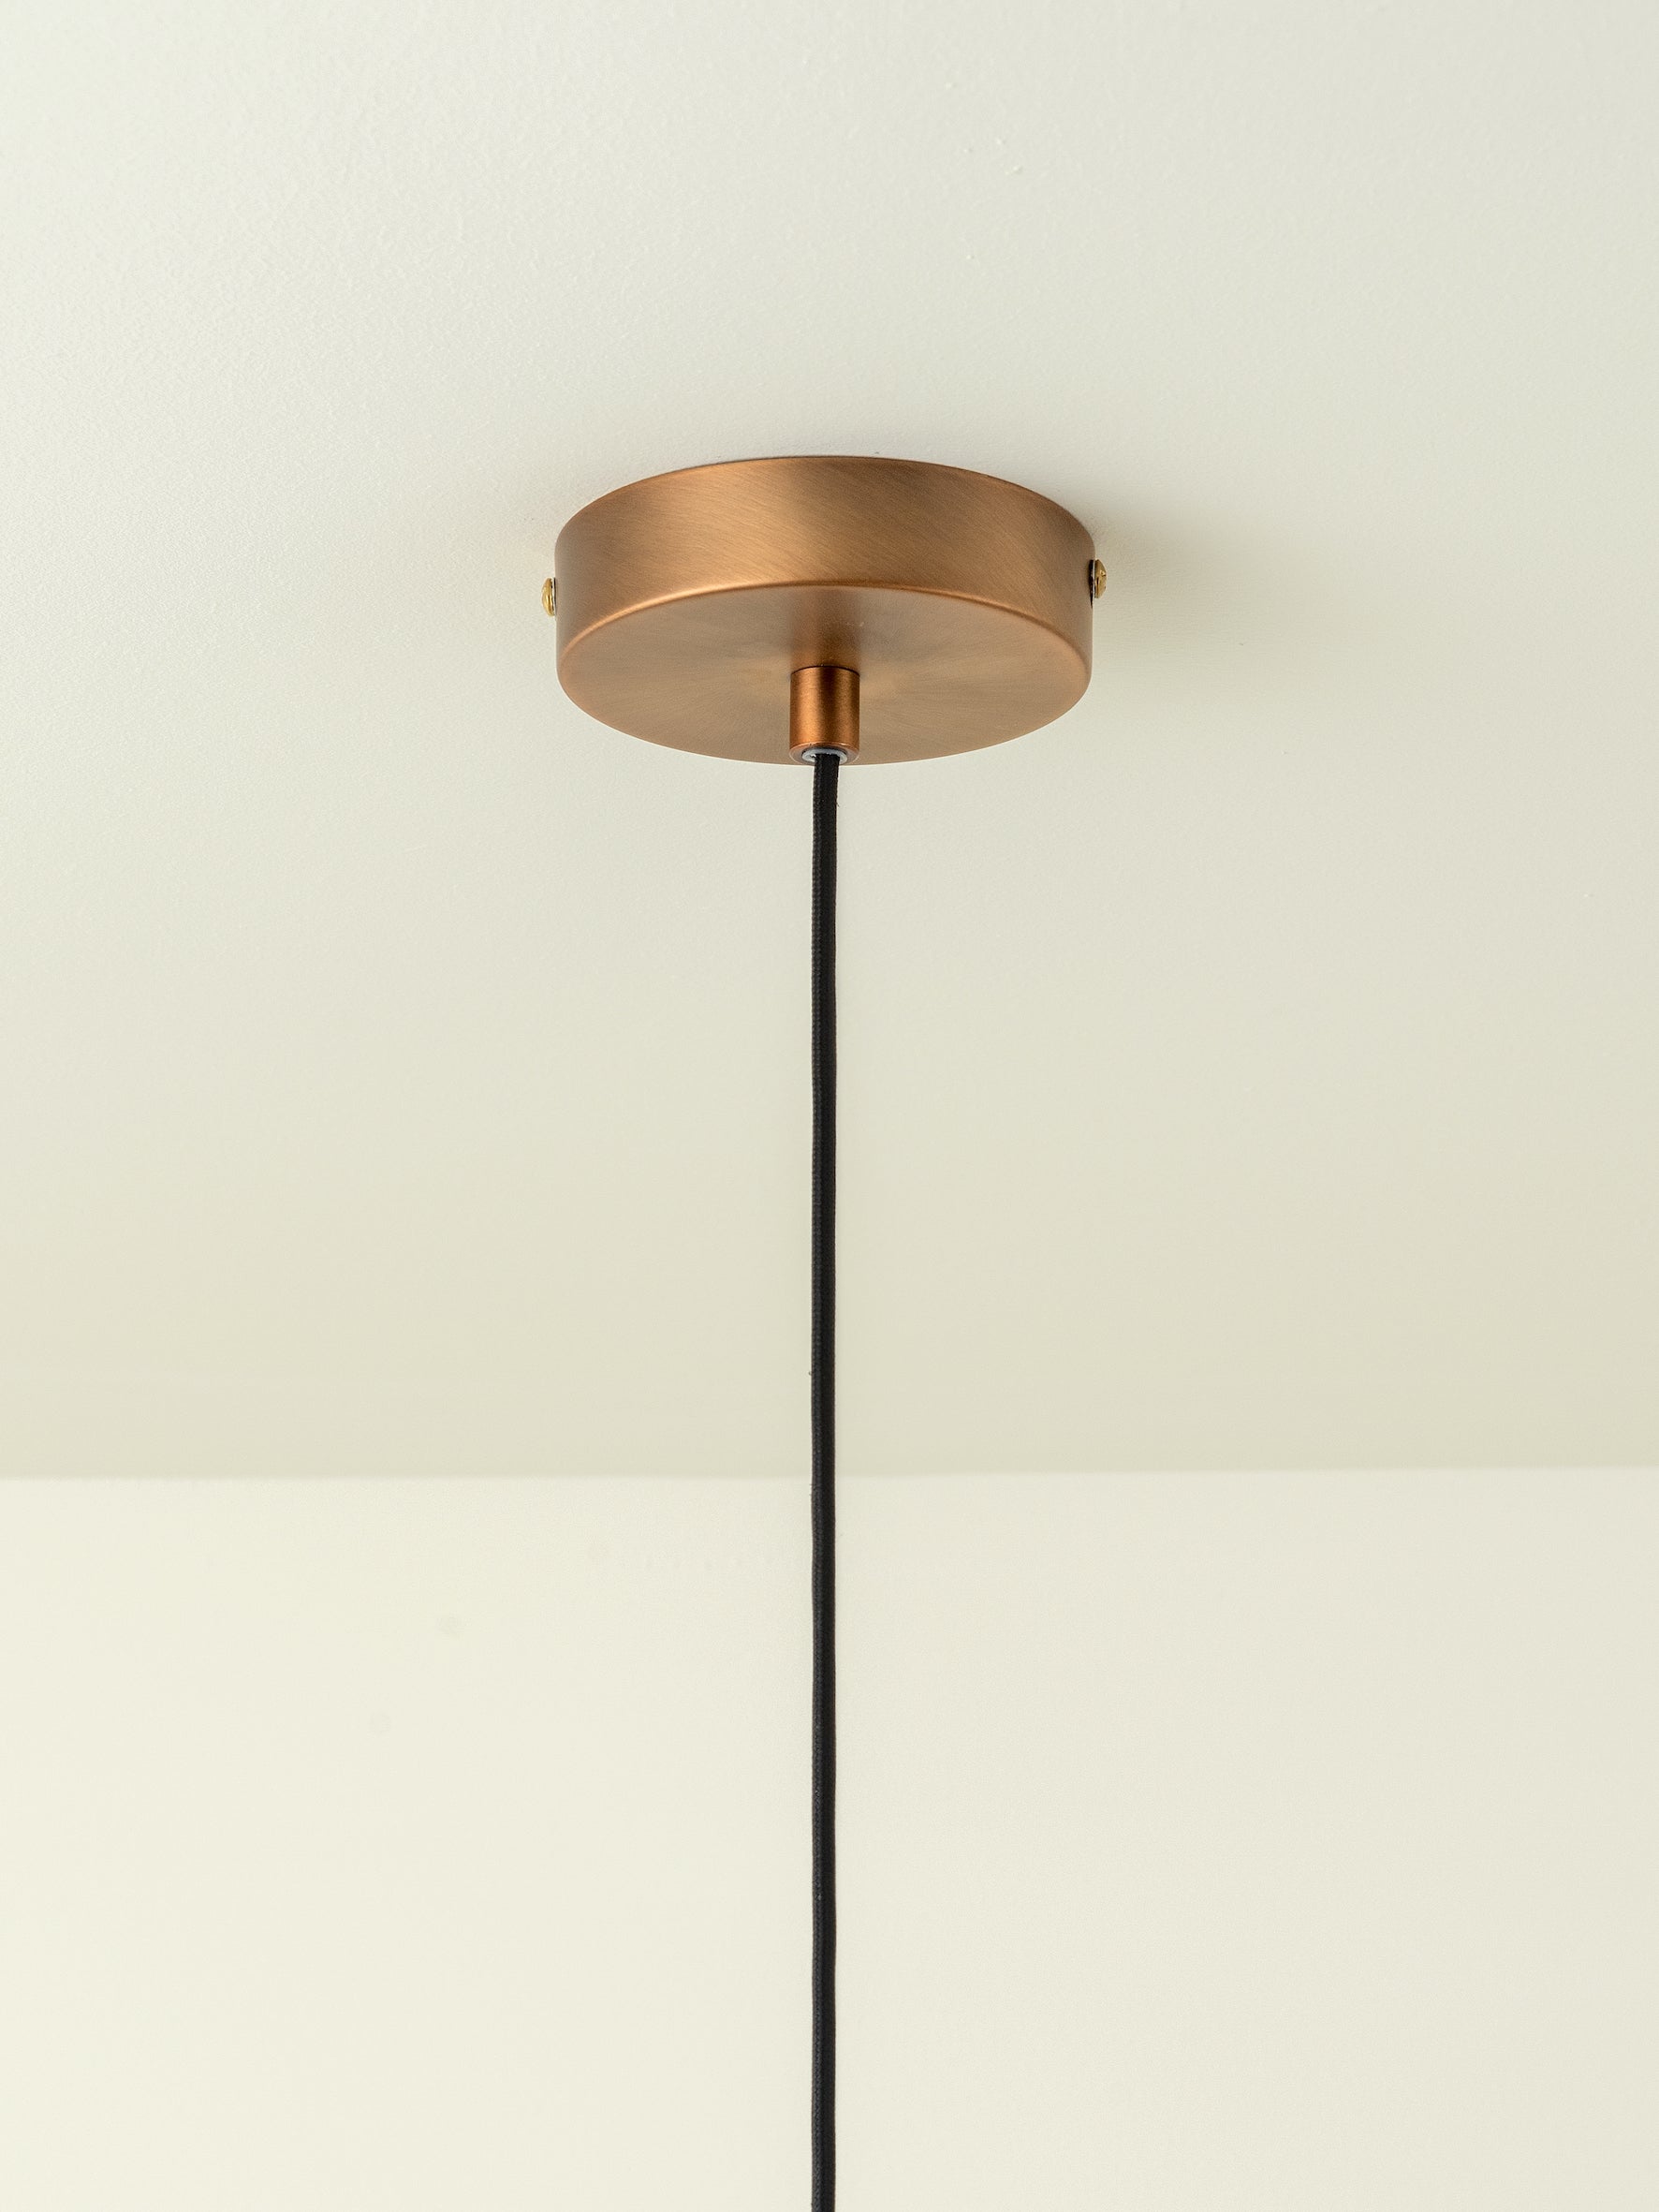 Capel - 1 light burnished brass drop cap lampholder kit | Ceiling Light | Lights & Lamps | UK